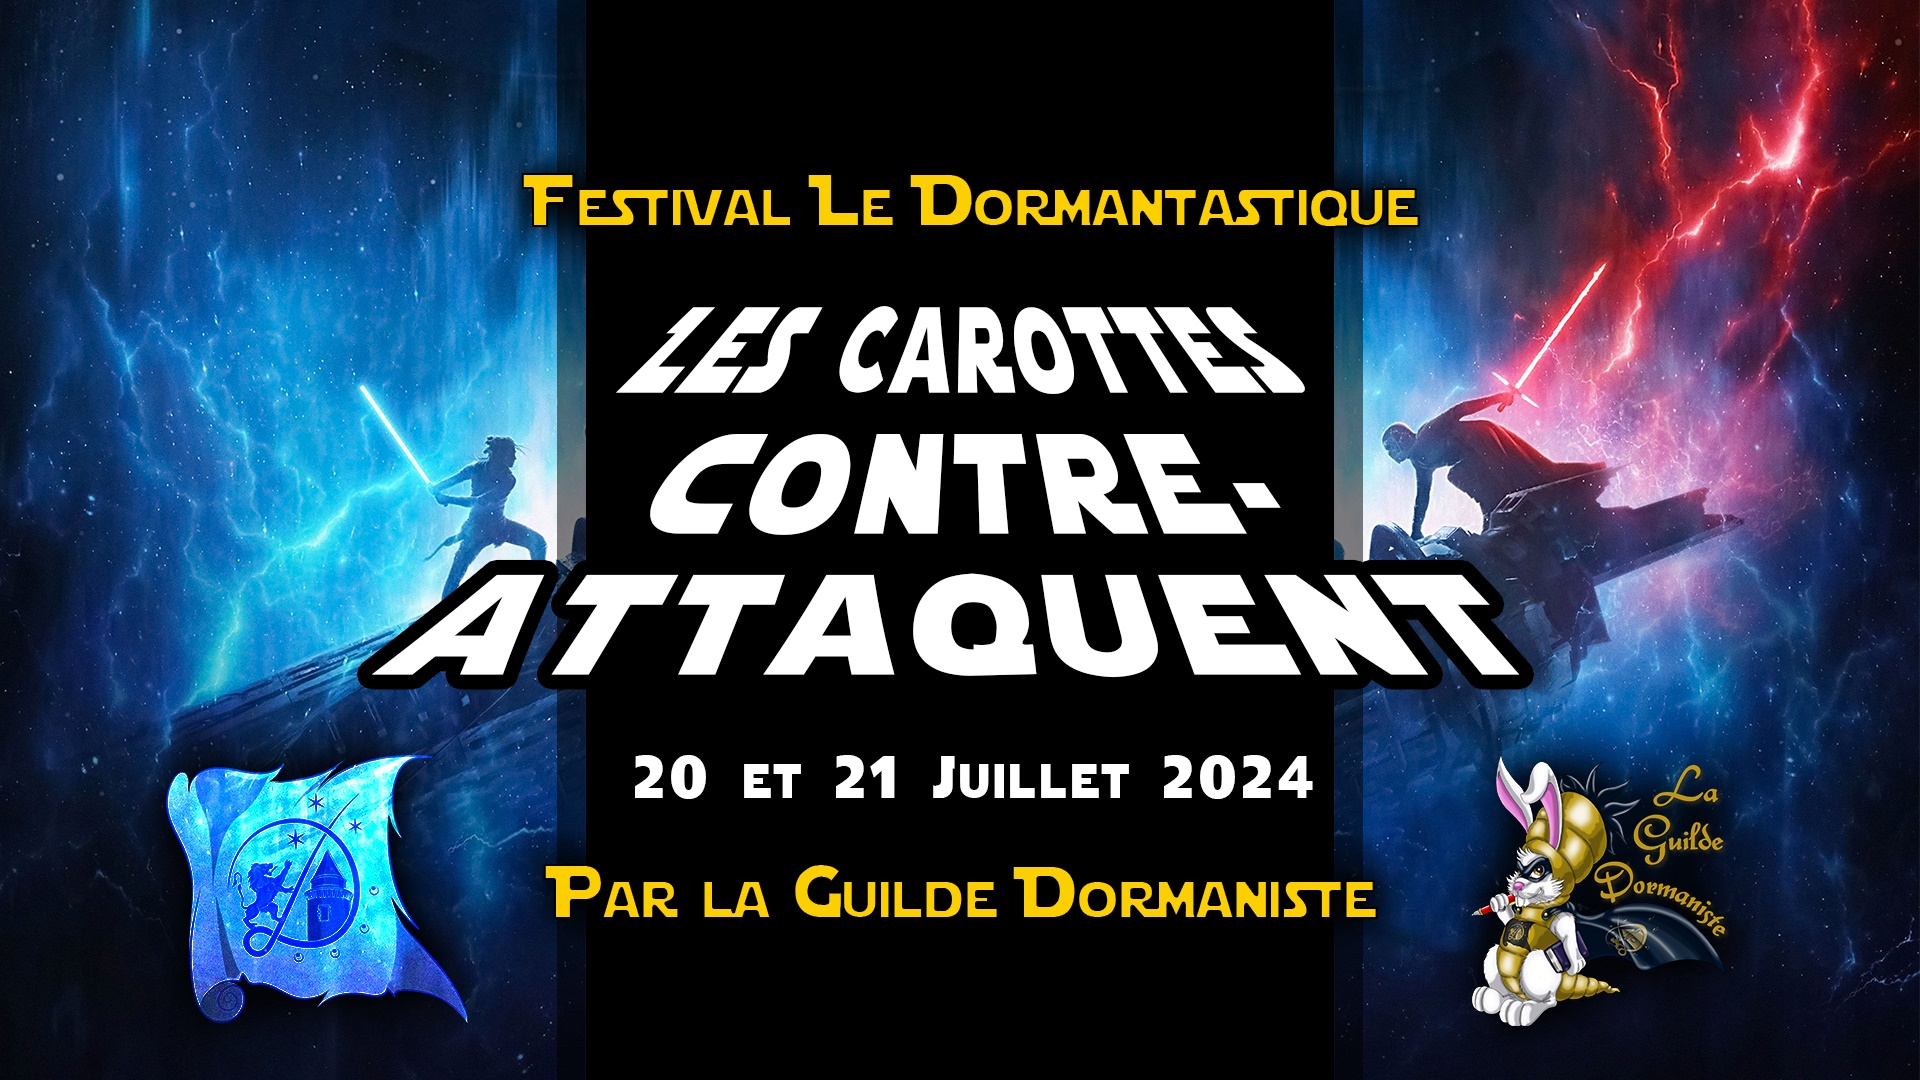 Festival Le Dormantastique